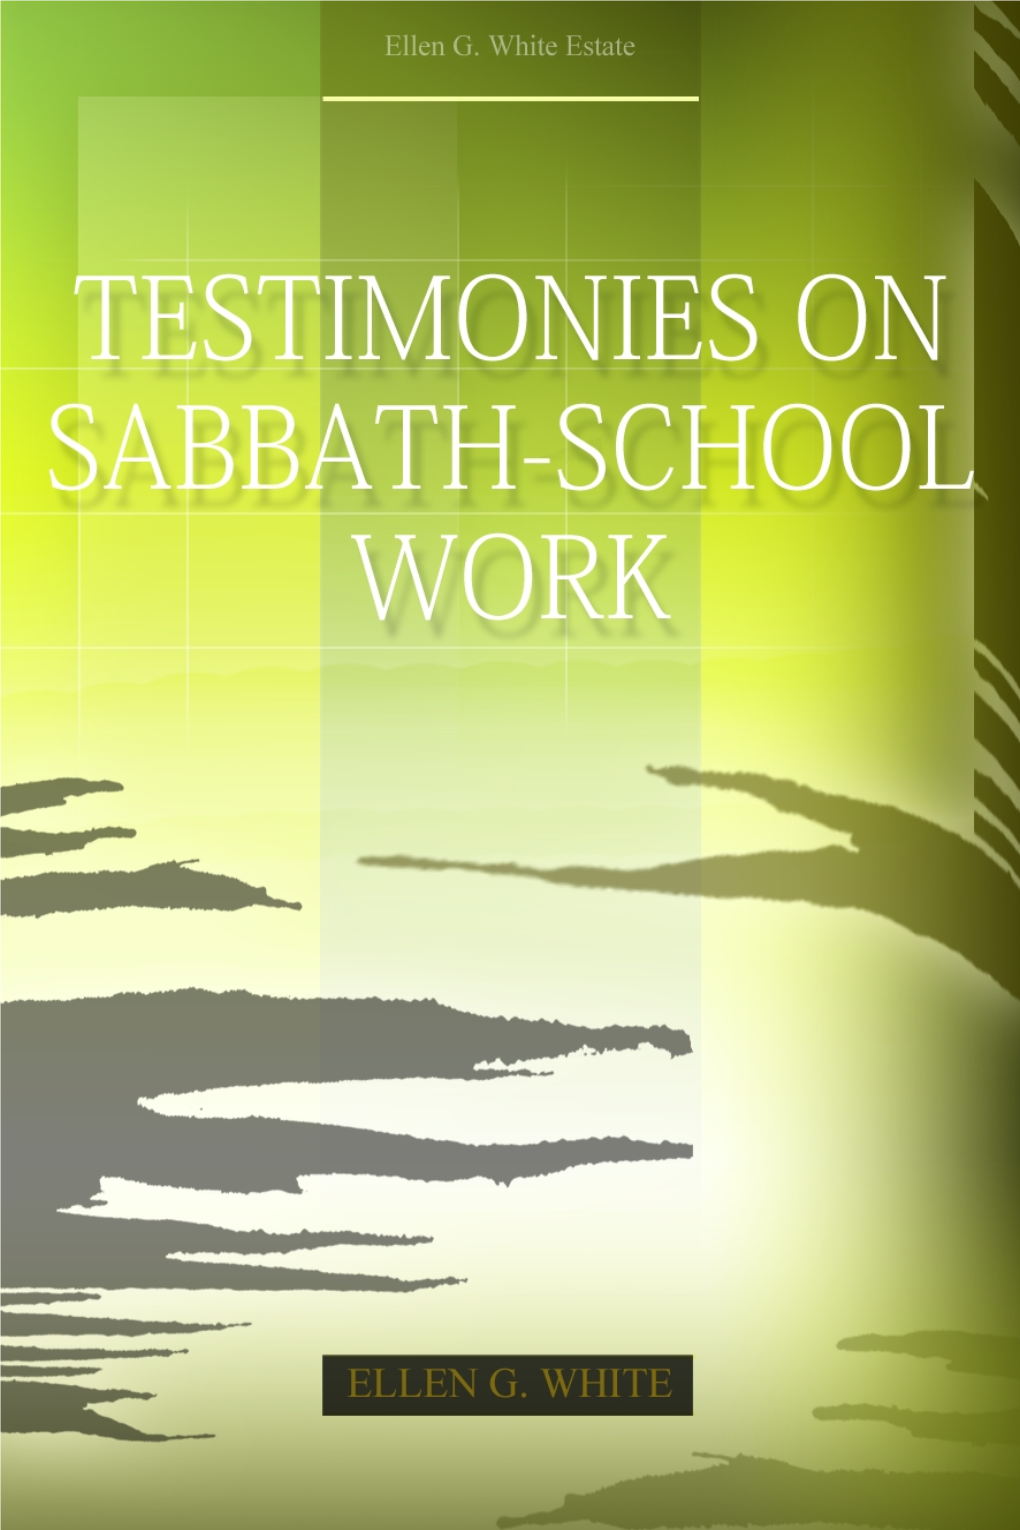 Testimonies on Sabbath-School Work